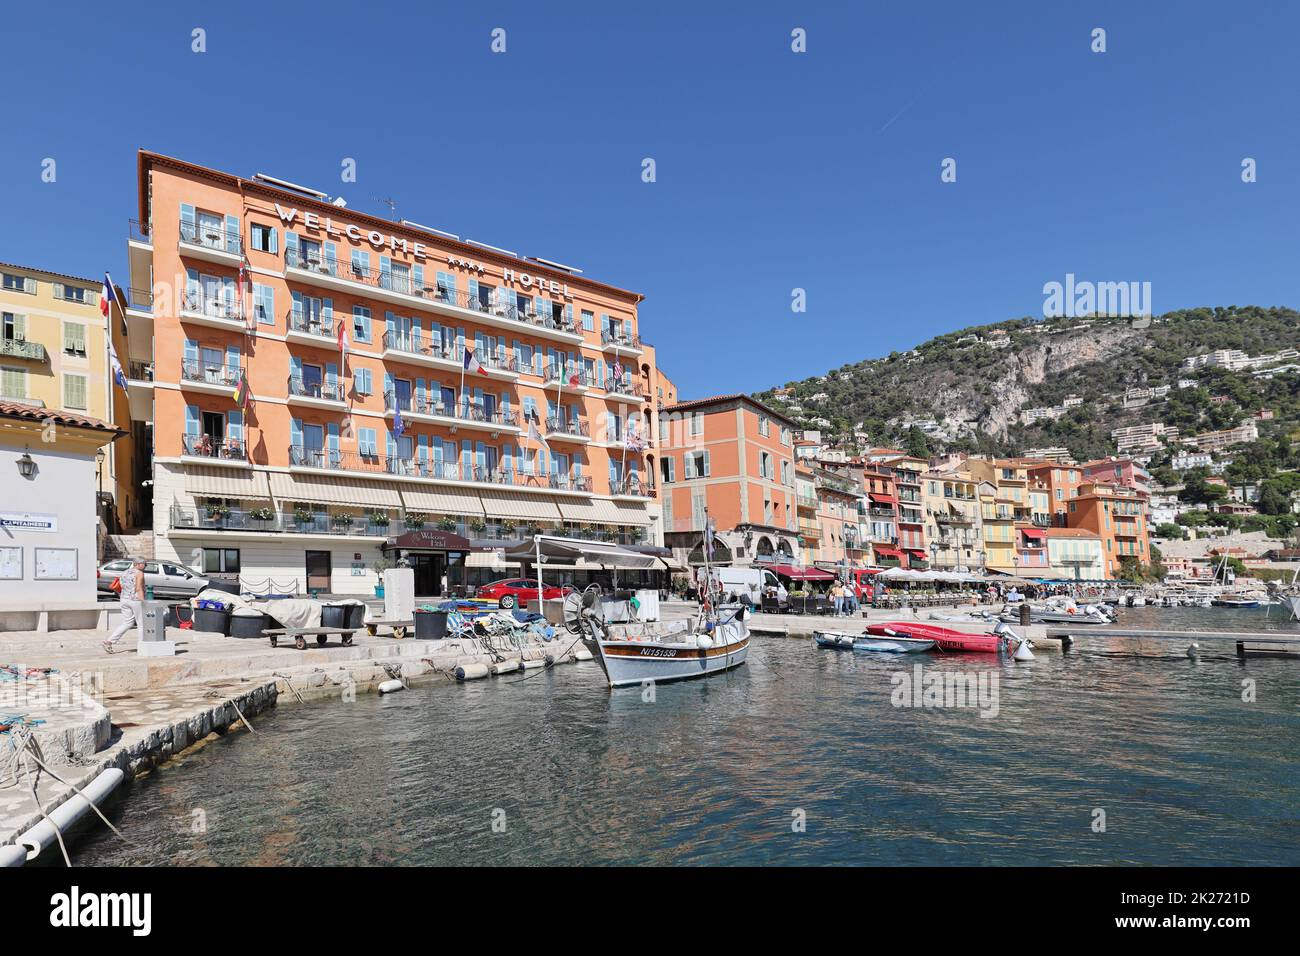 The Welcome hotel, Villefranche-sur-Mer, Alpes-Maritimes, Provence-Alpes-Cote d'Azur, France. Stock Photo